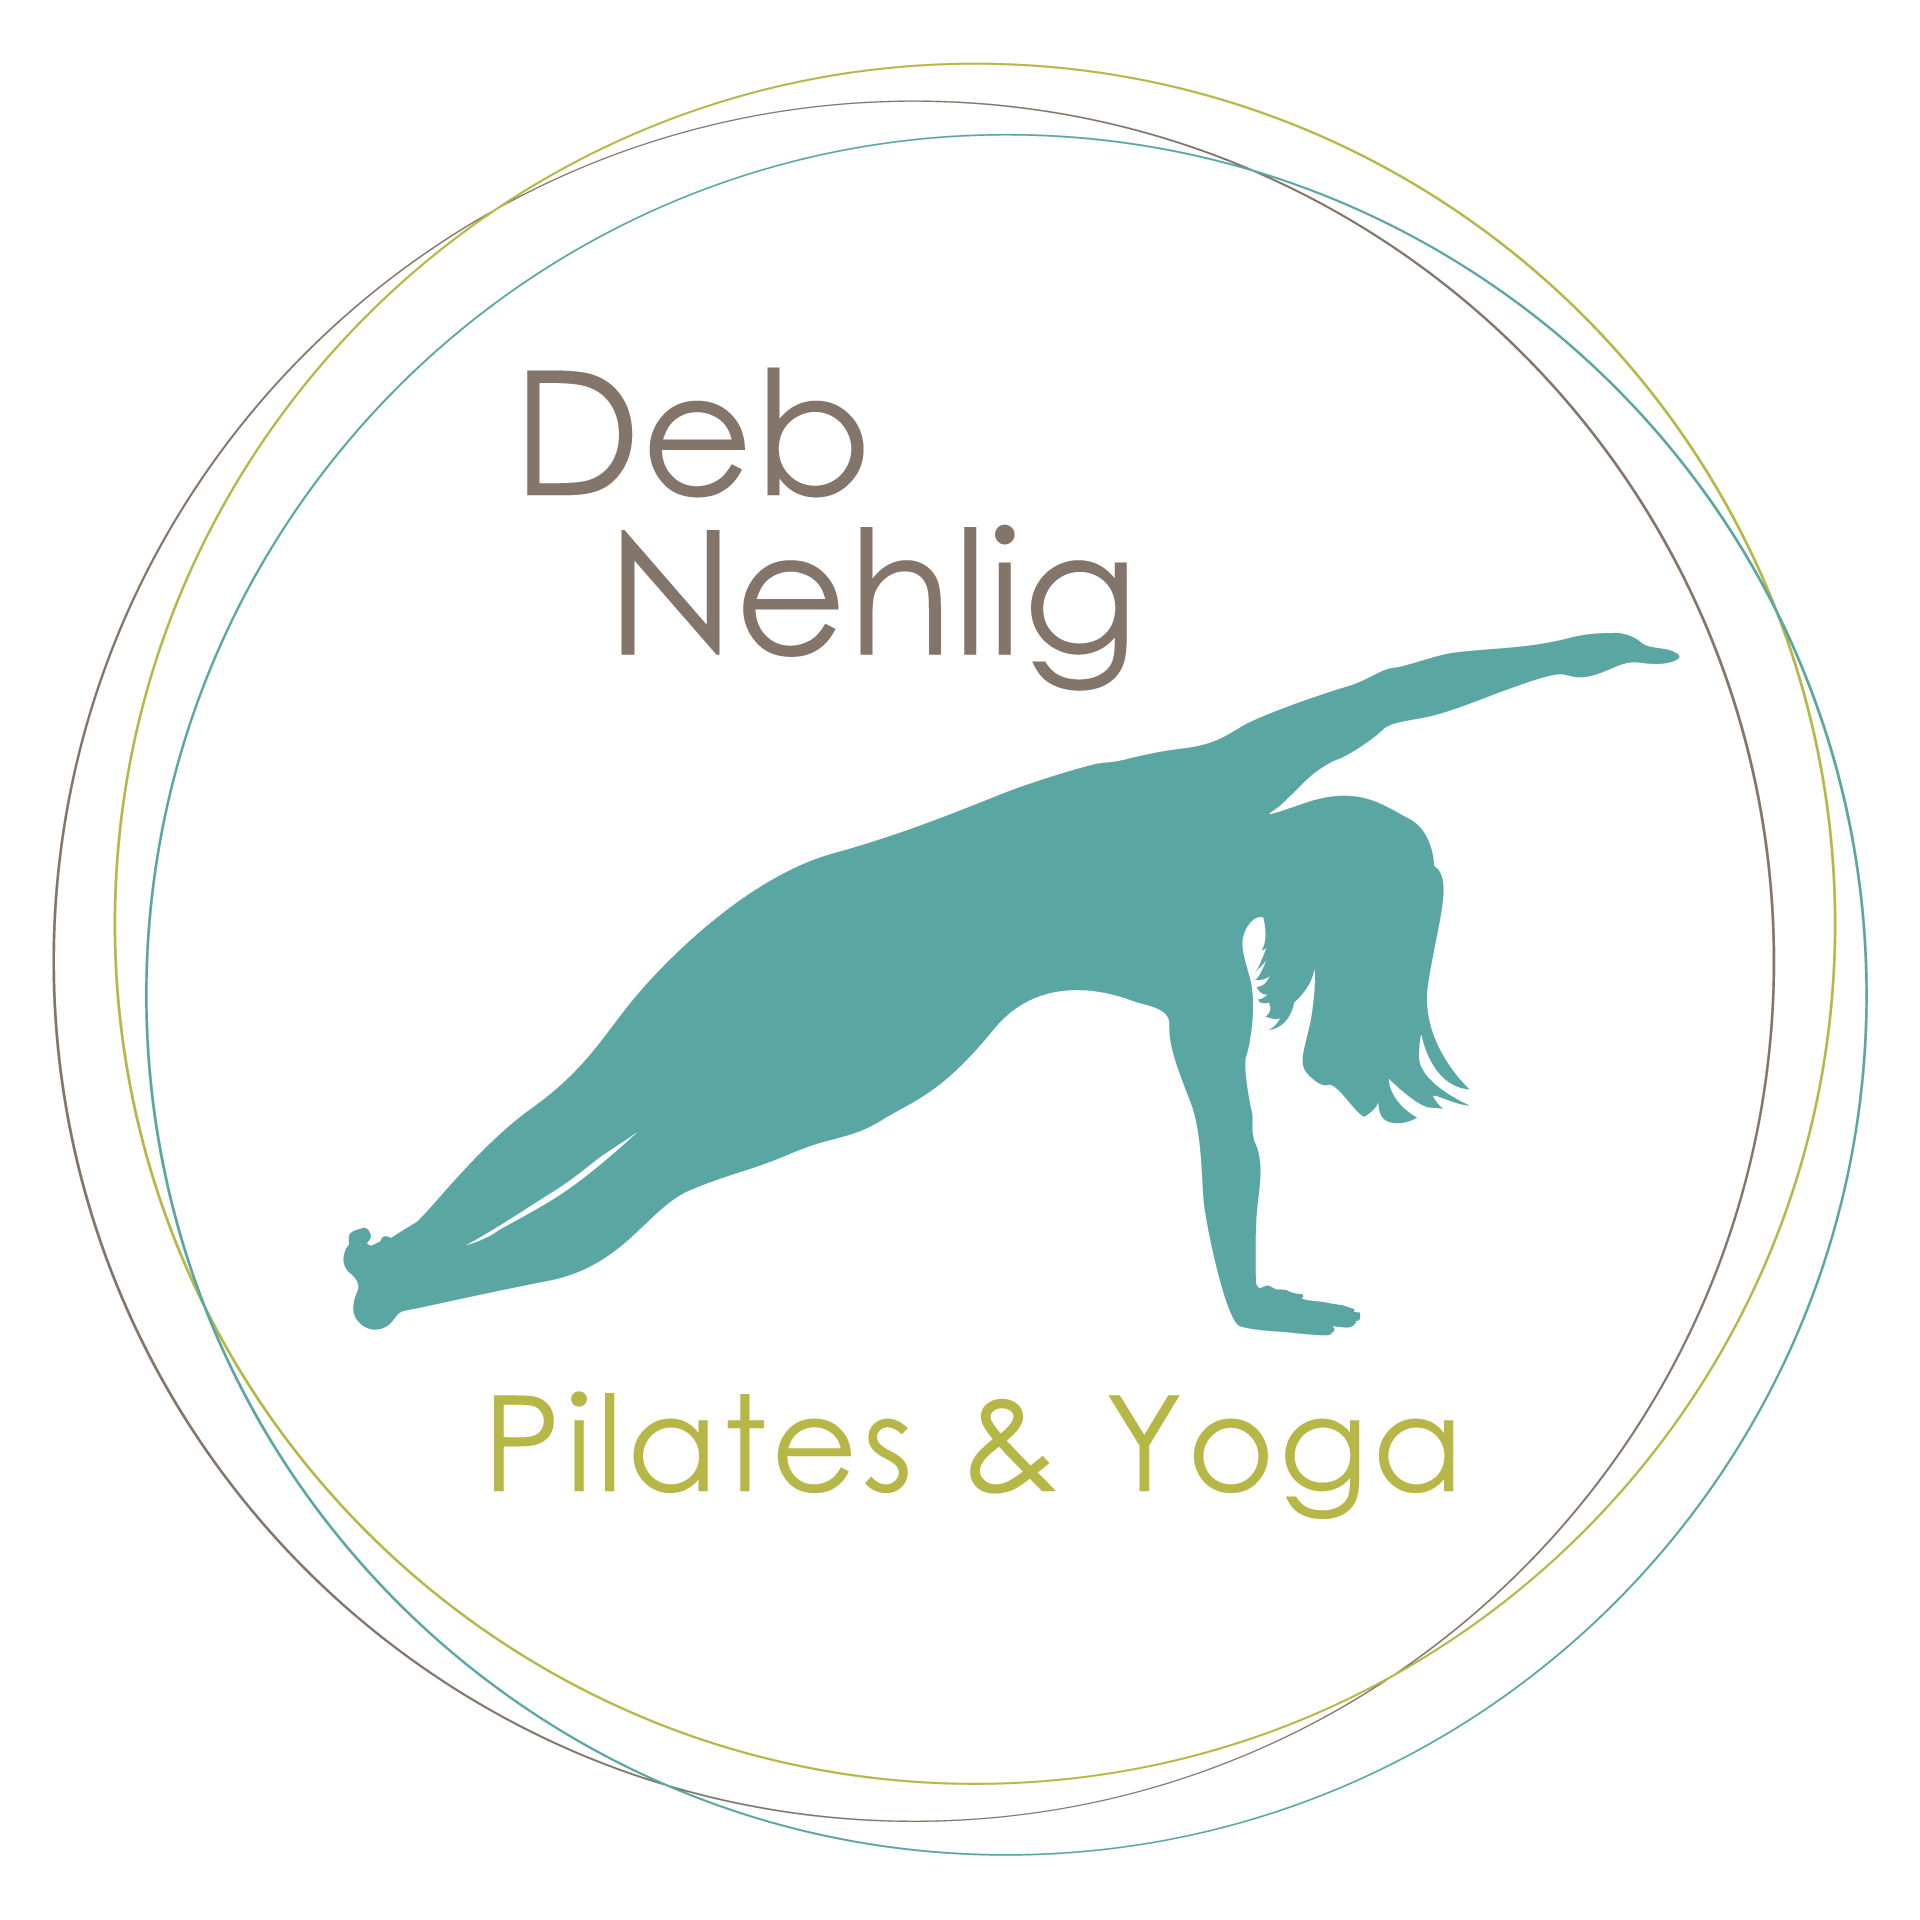 Deb Nehlig Pilates & Yoga